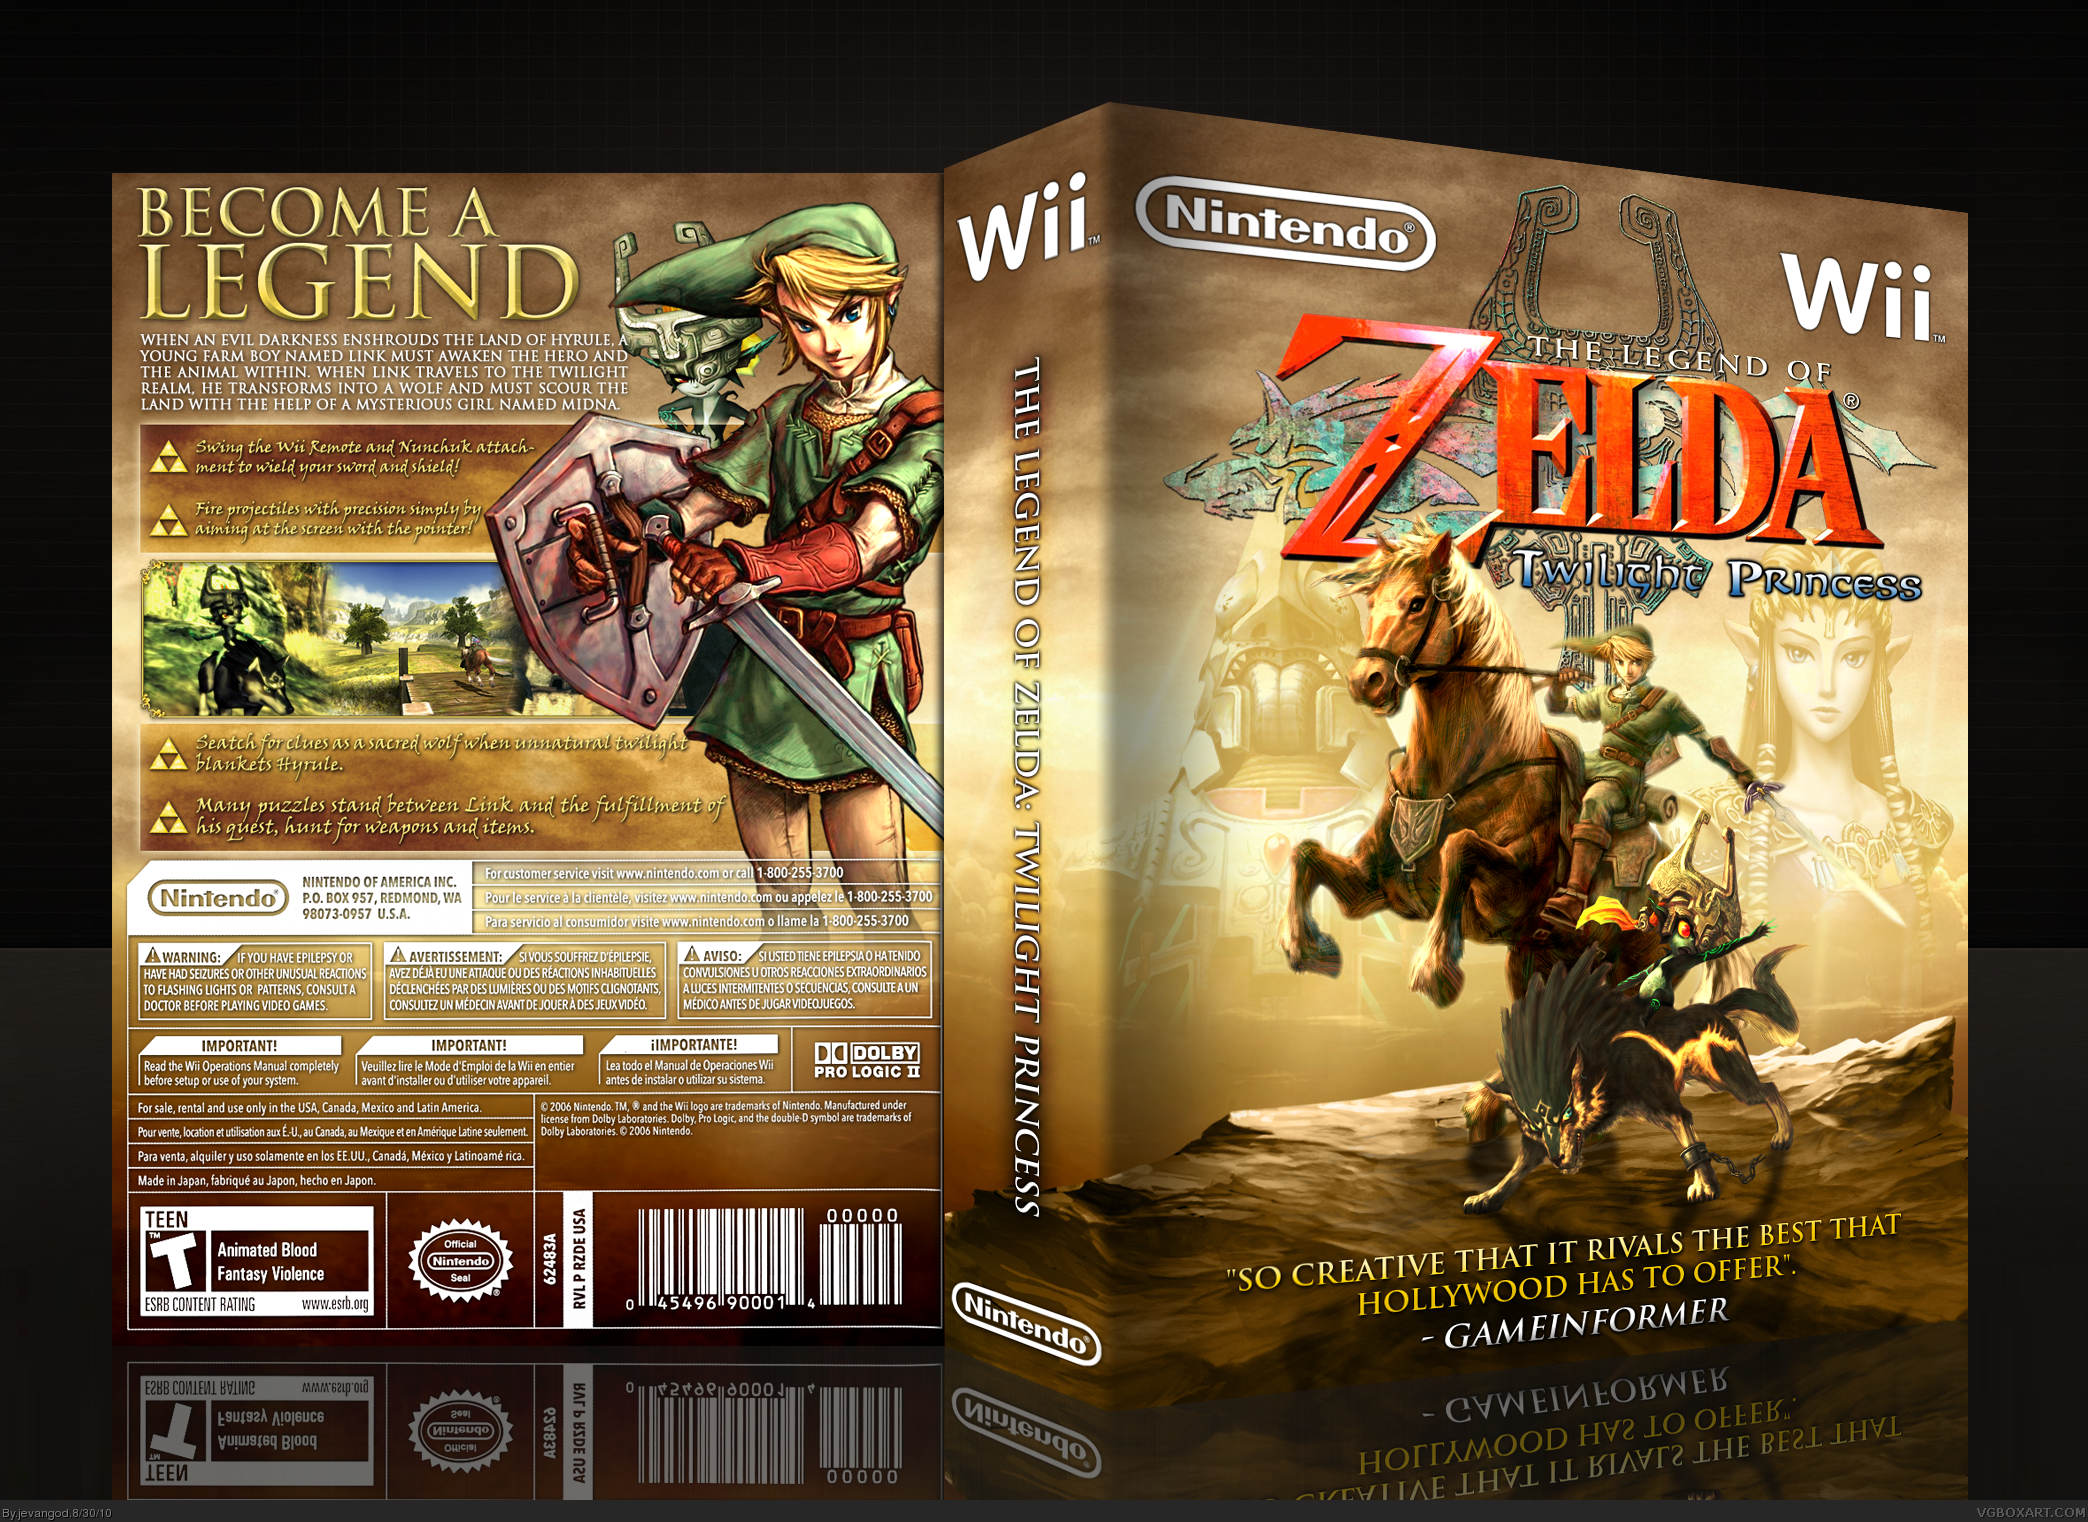 The Legend Of Zelda: Twilight Princess box cover